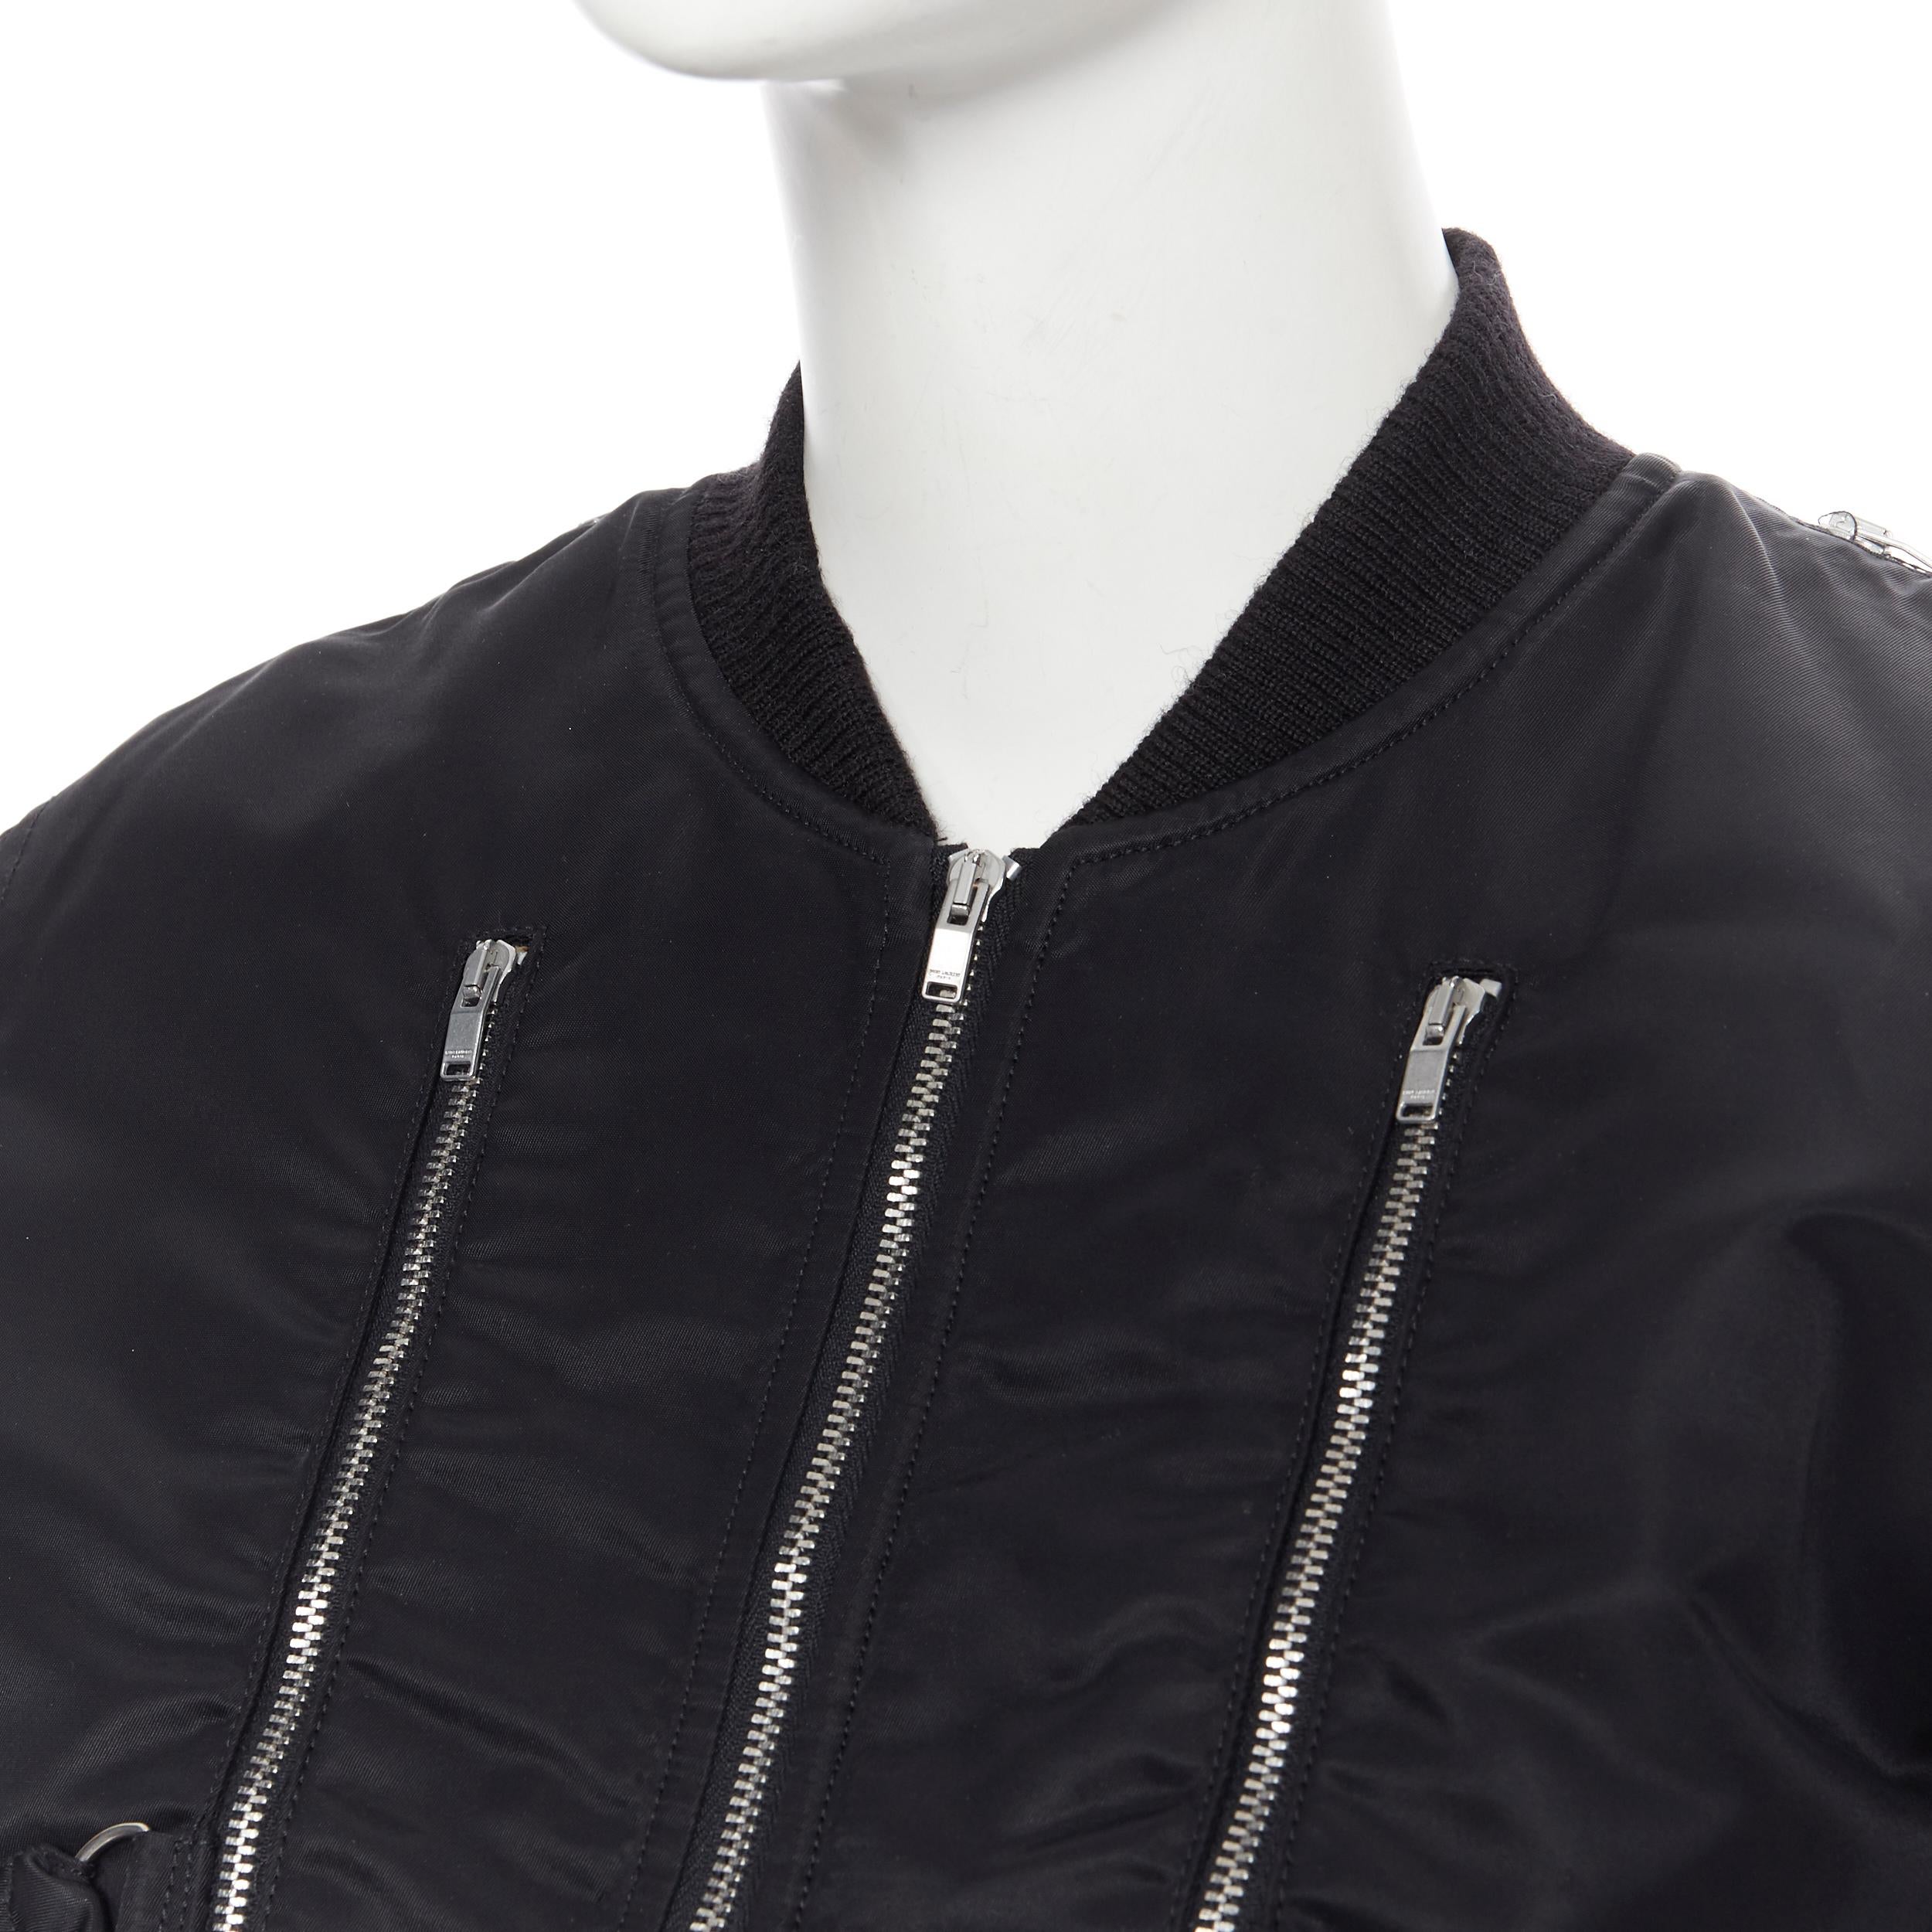 SAINT LAURENT HEDI SLIMANE 2015 black nylon zipper bondage strap MA-1 bomber F34
Brand: Saint Laurent
Designer: Hedi Slimane
Collection: 2015
Model Name / Style: Bomber jacket
Material: Nylon
Color: Black
Pattern: Solid
Closure: Zip
Extra Detail: